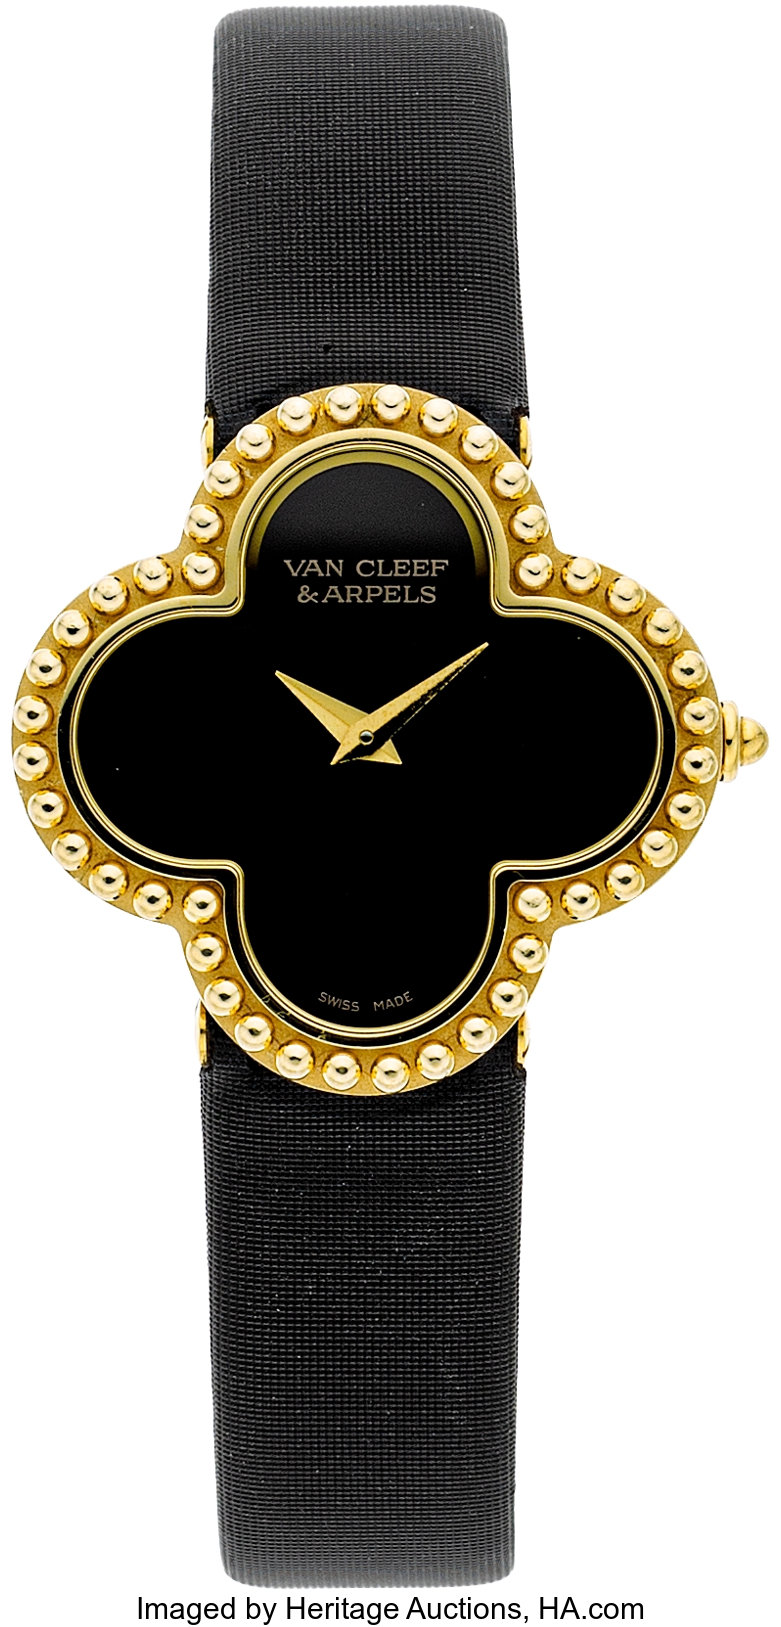 Alhambra Watches - Van Cleef & Arpels